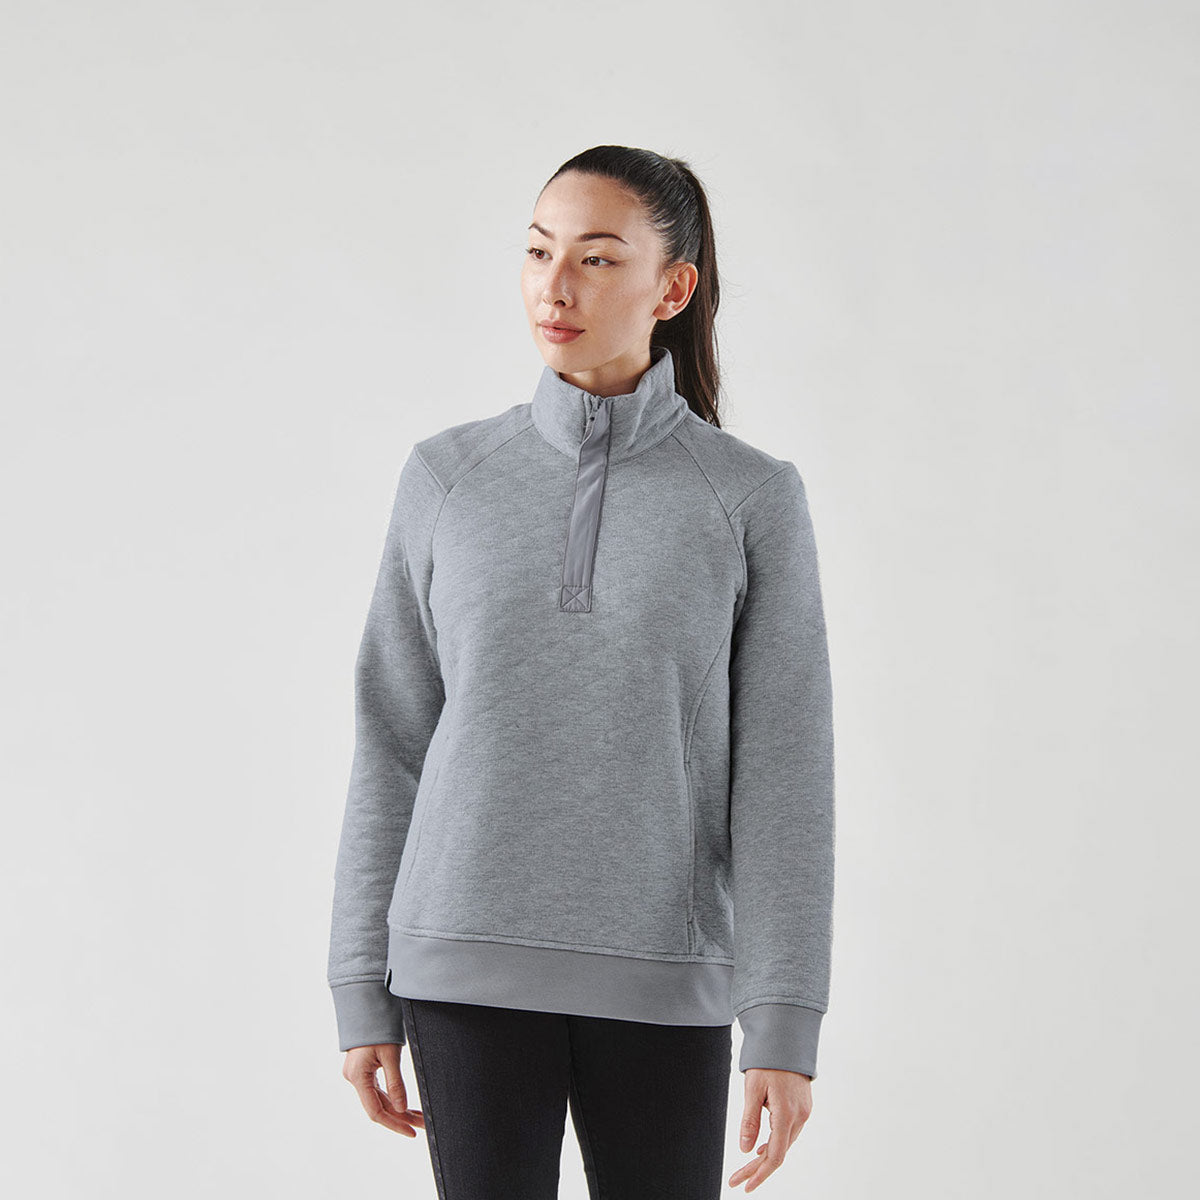 Women's Montebello 1/4 Zip Pullover - Stormtech USA Retail